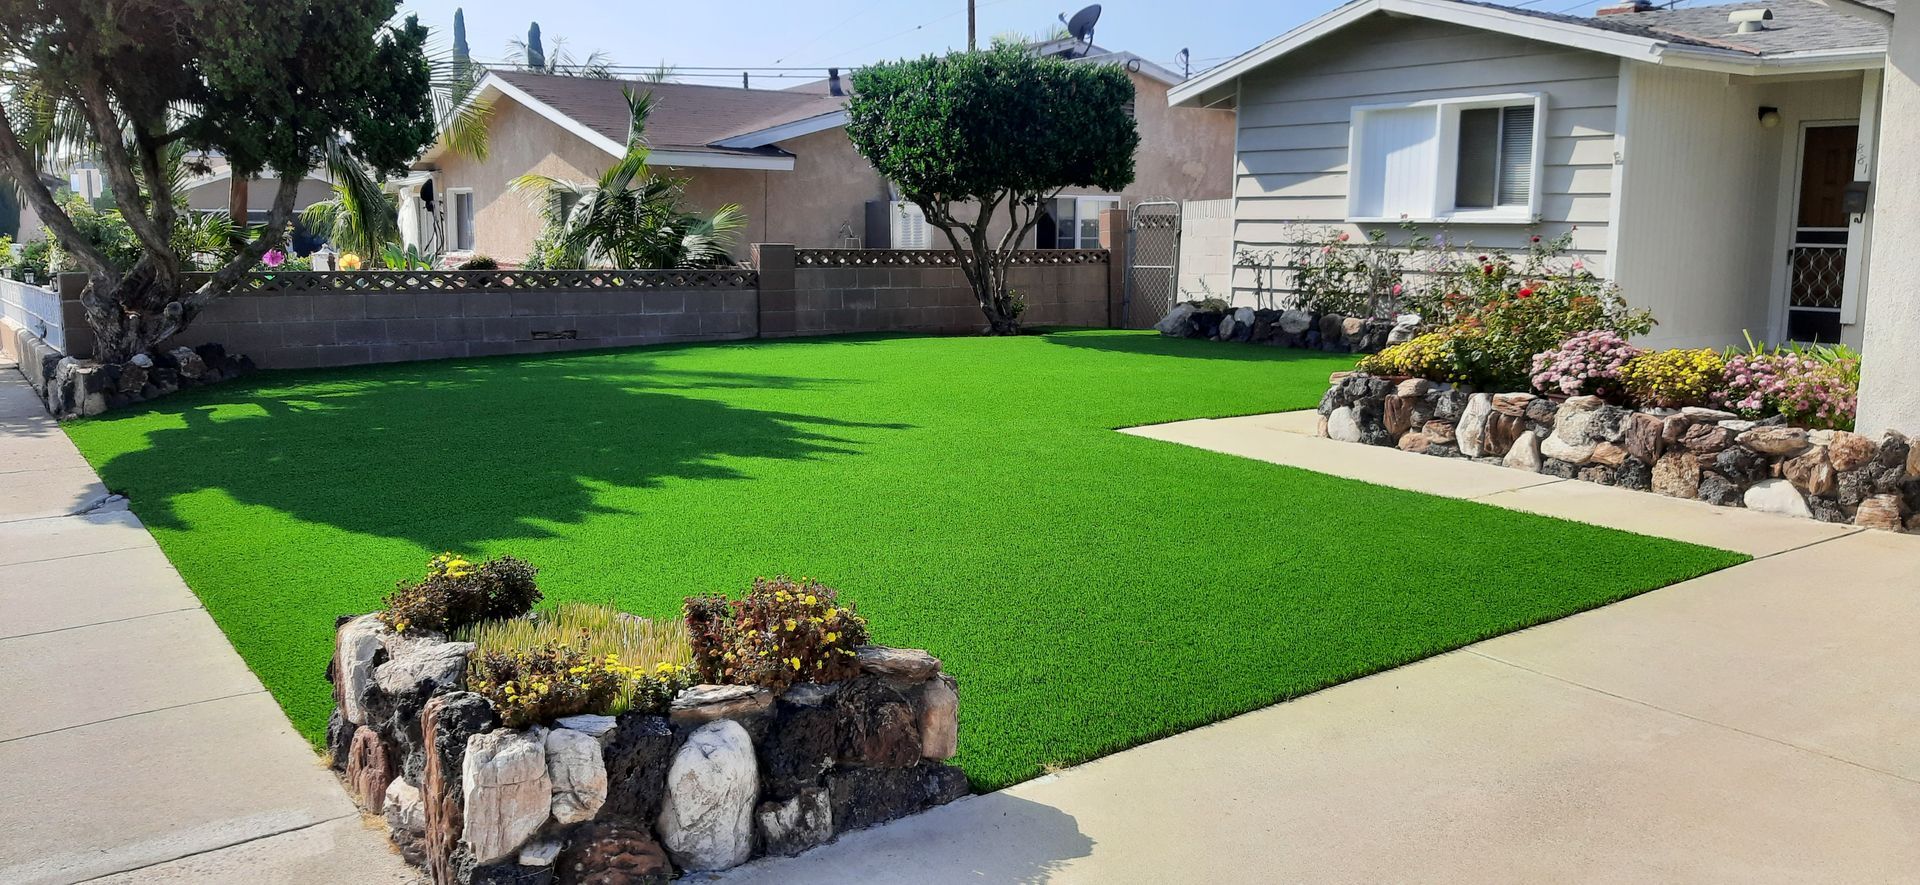 yard after installing artificial grass